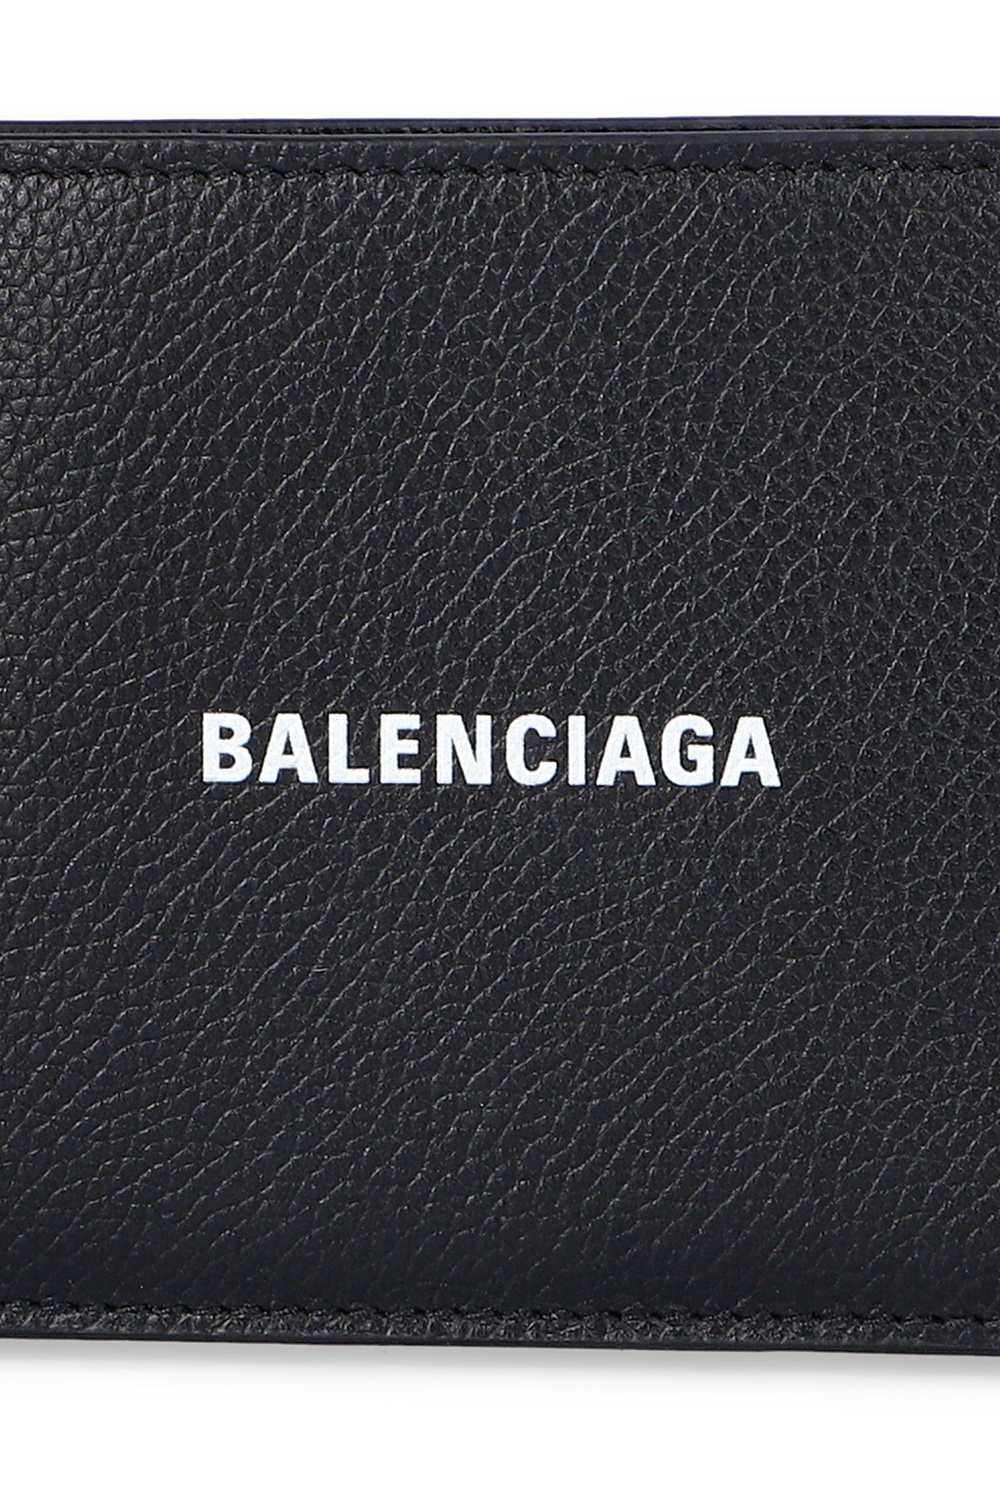 Balenciaga ELEGANCE OR EXTRAVAGANCE